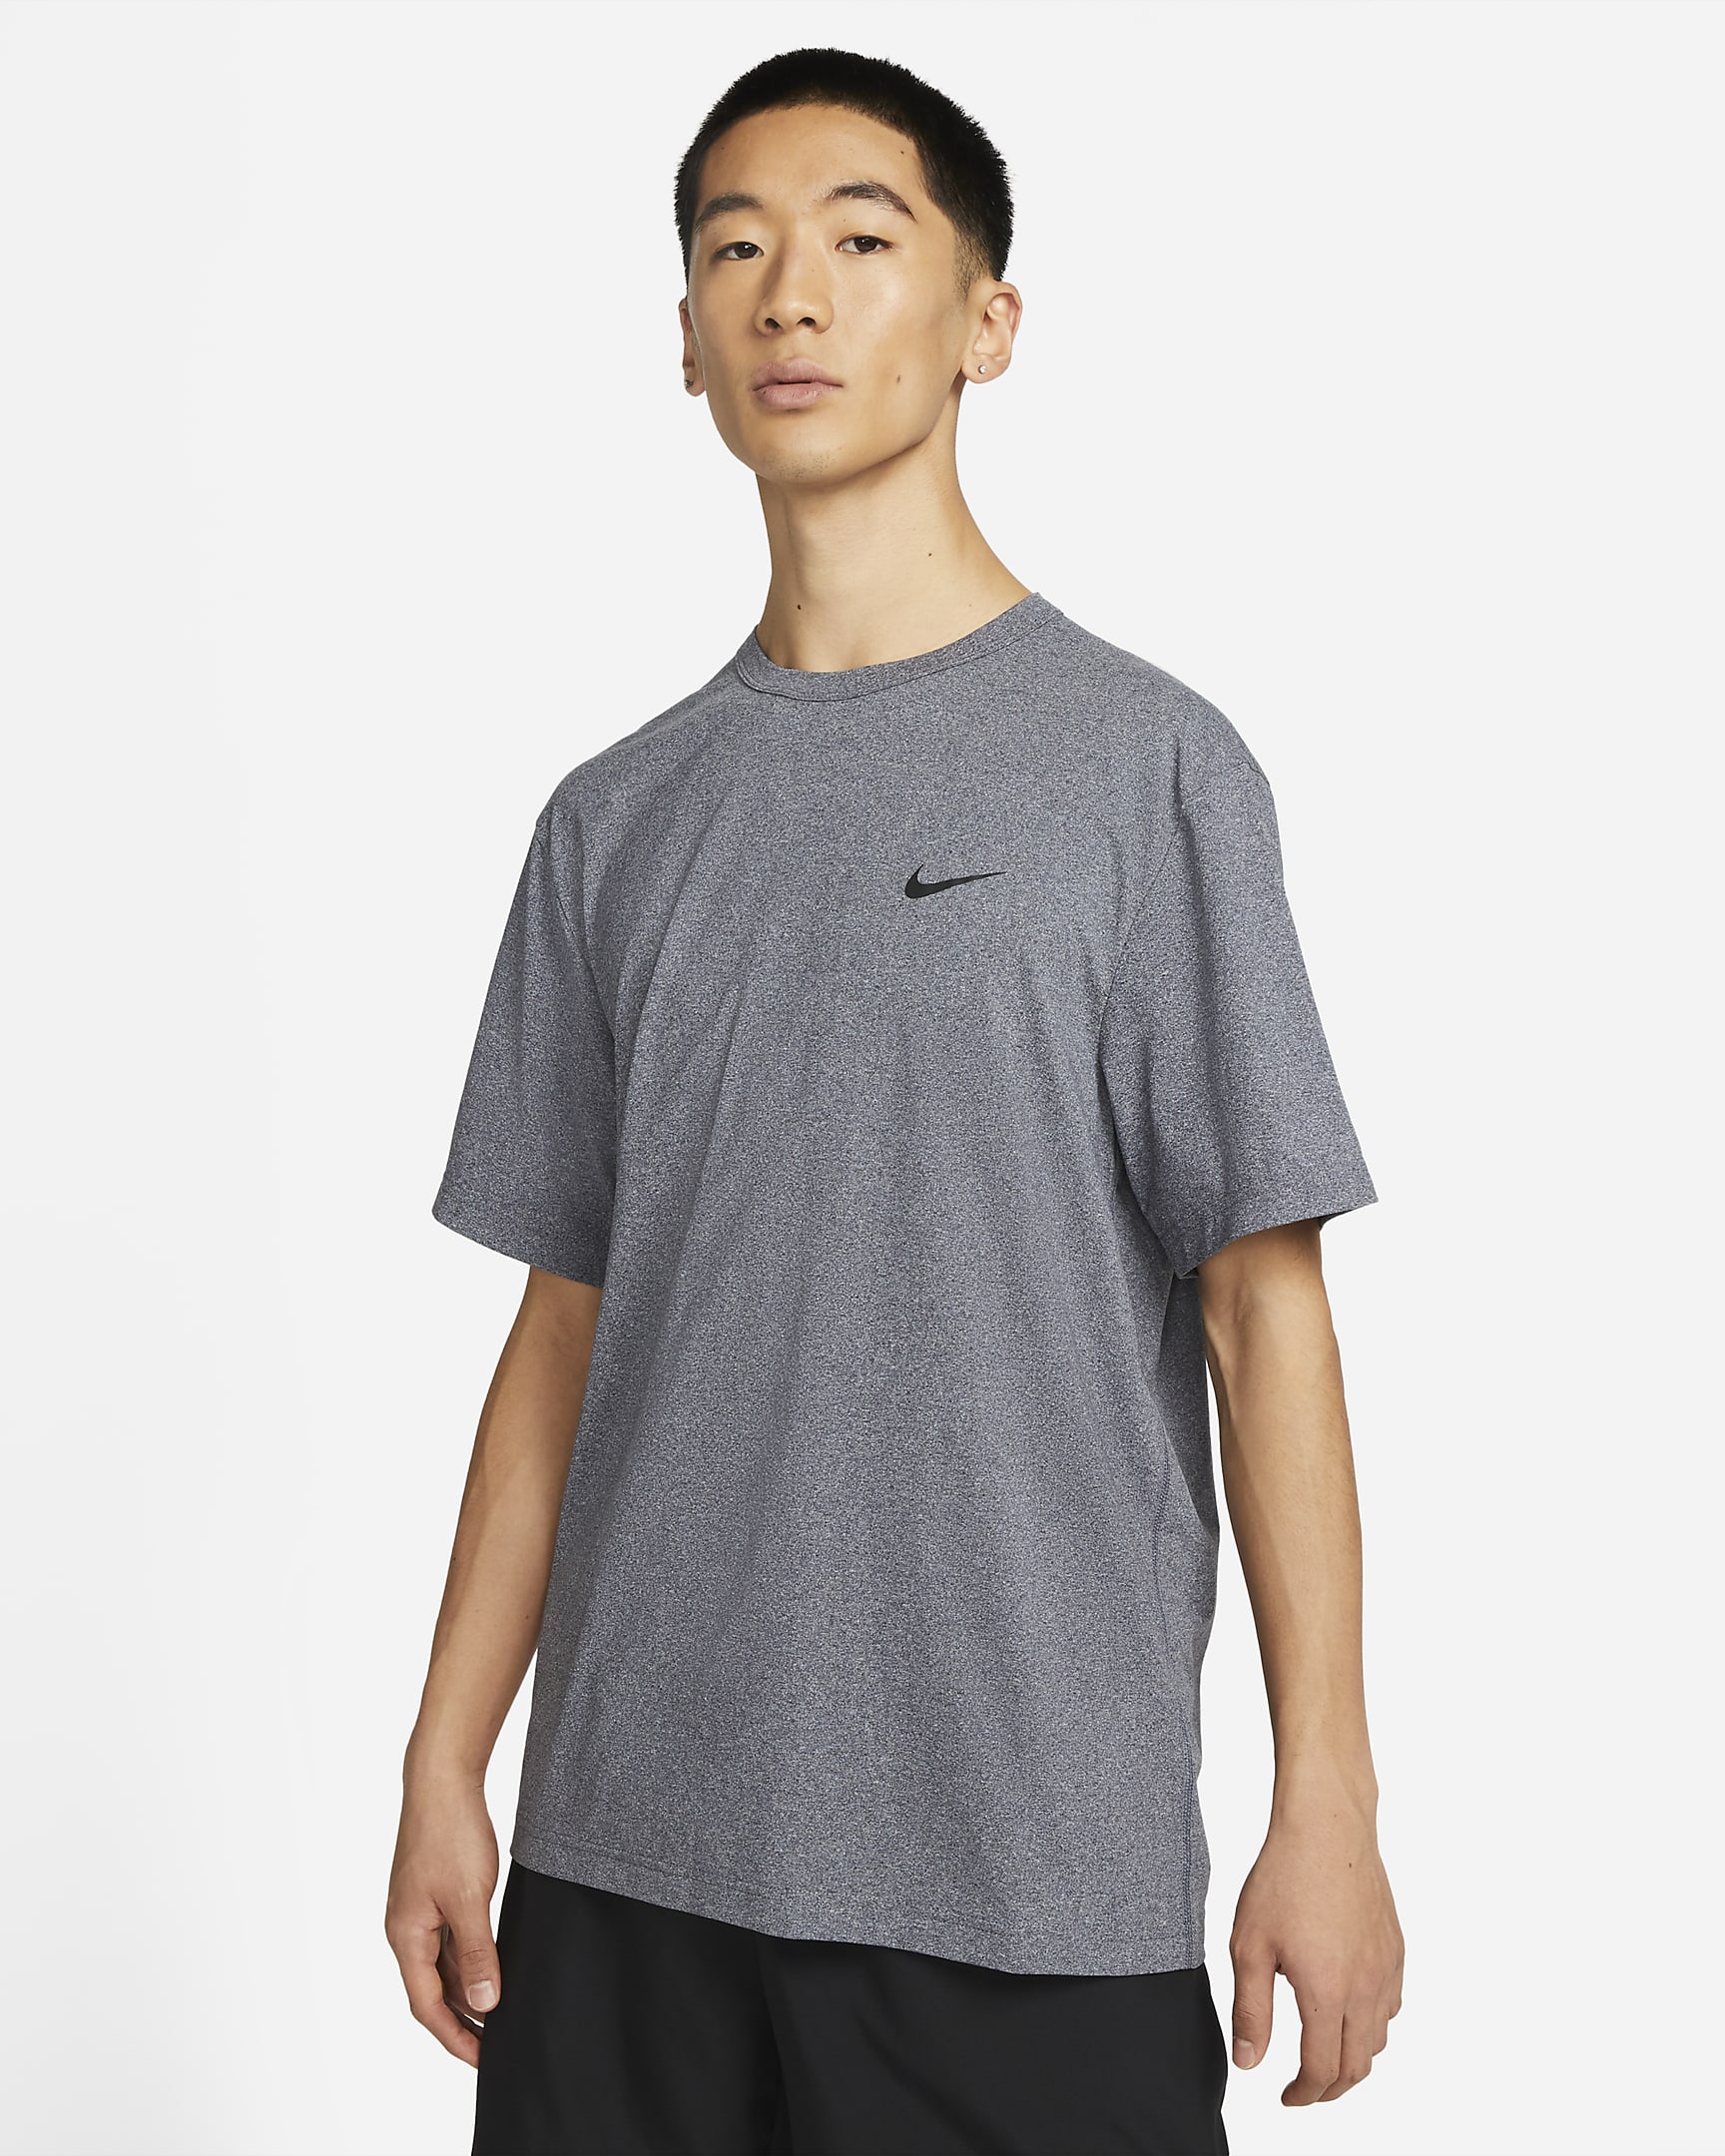 Nike Dri-FIT UV Hyverse Men's Short-Sleeve Fitness Top. Nike SG